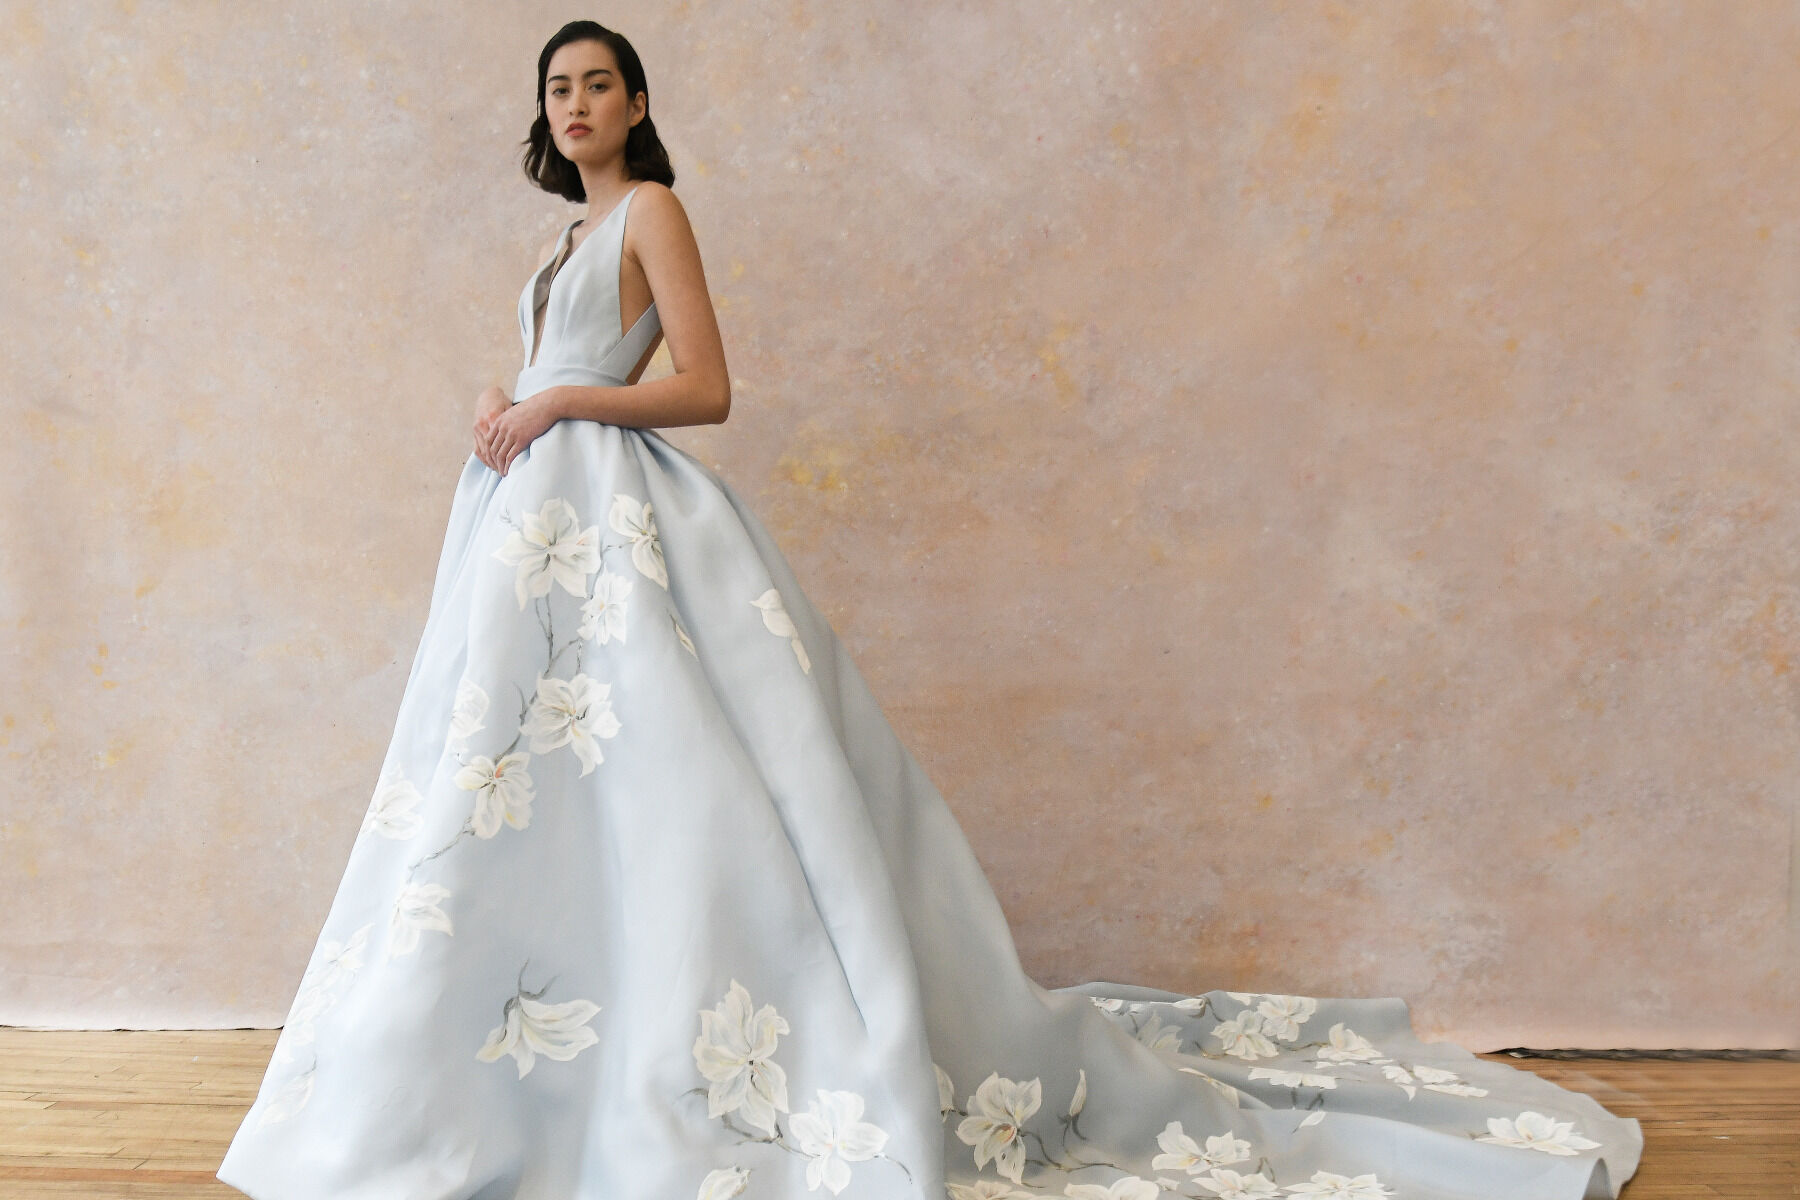 2023 Wedding dress trends: a blue wedding dress by Ines Di Santo